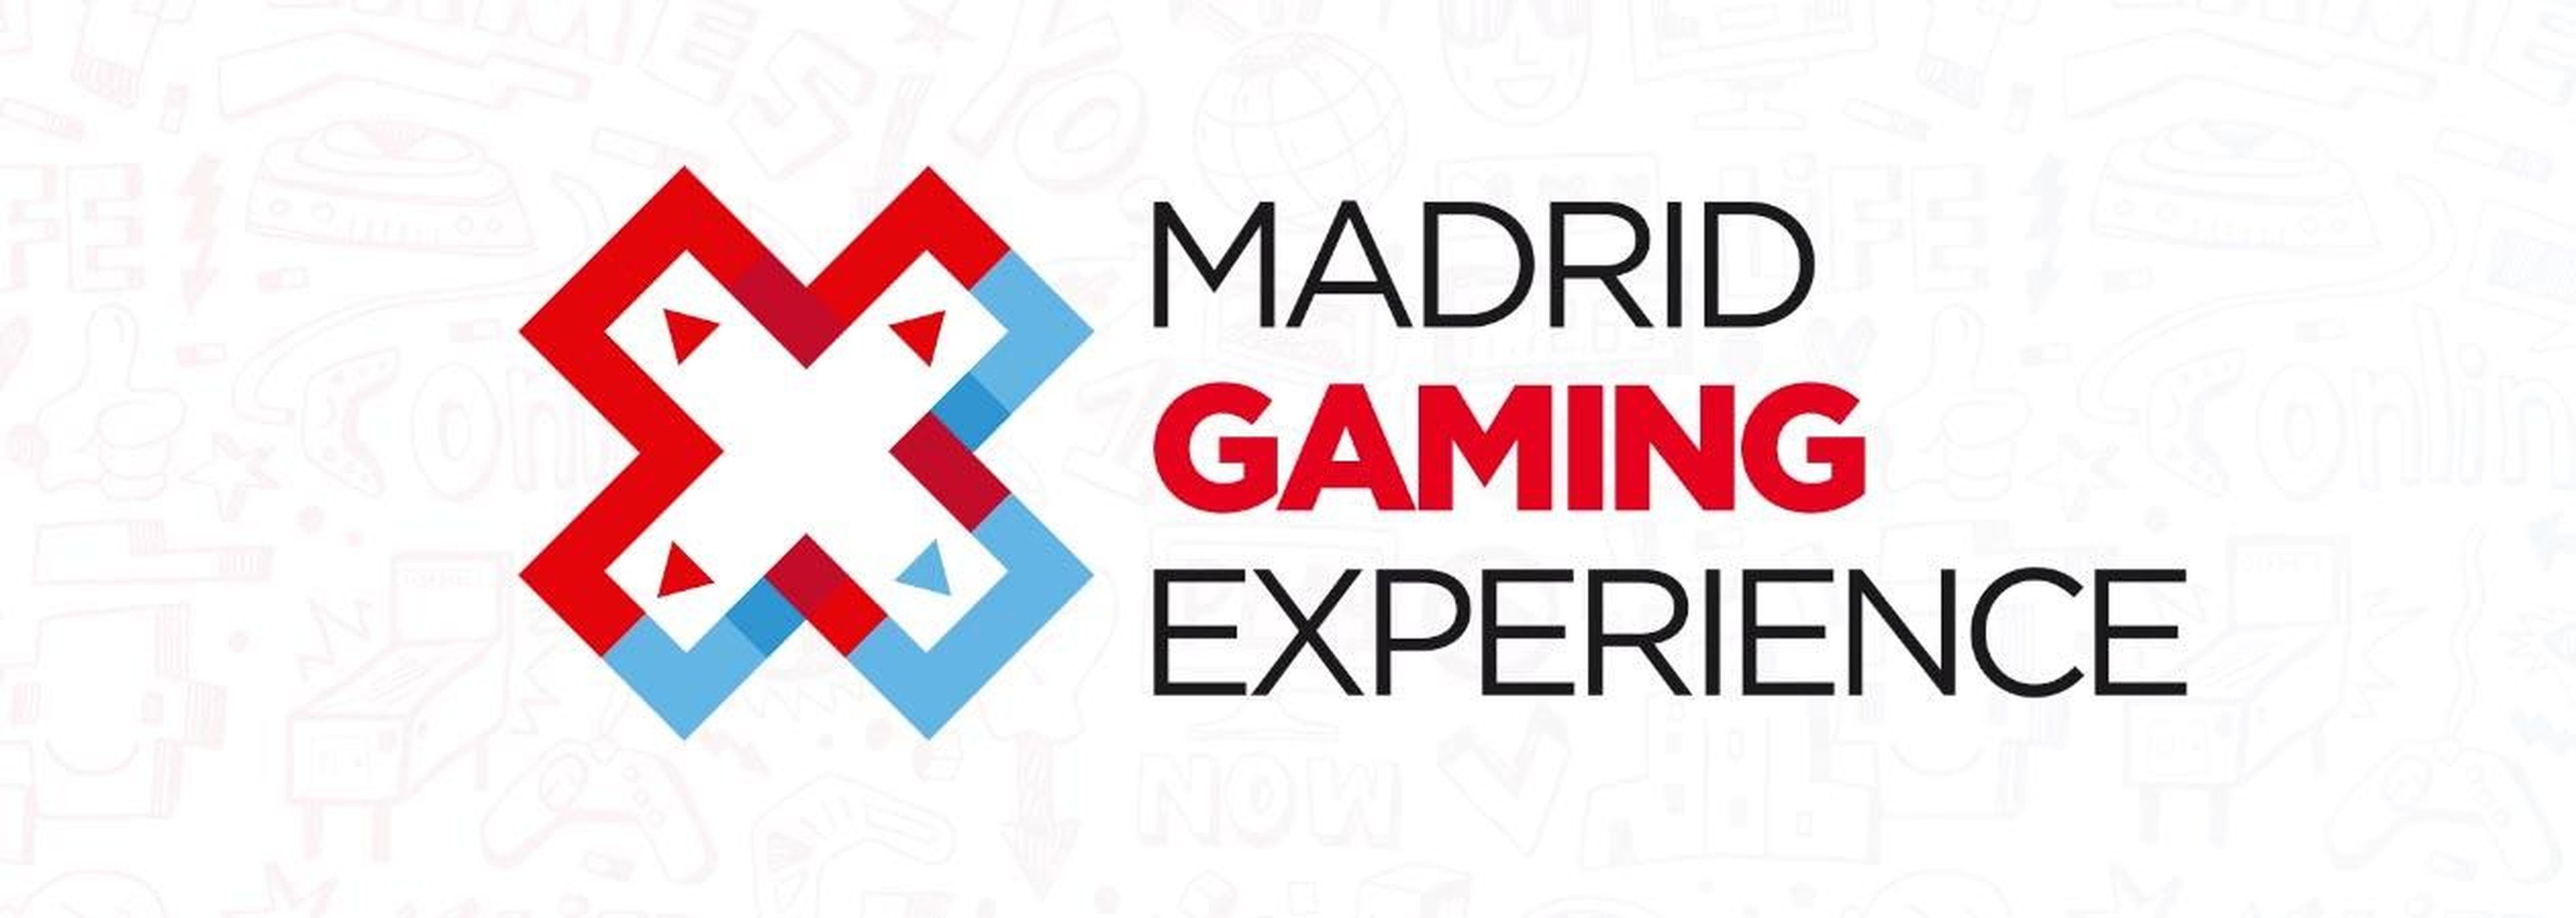 Madrid Gaming Experience cabecera